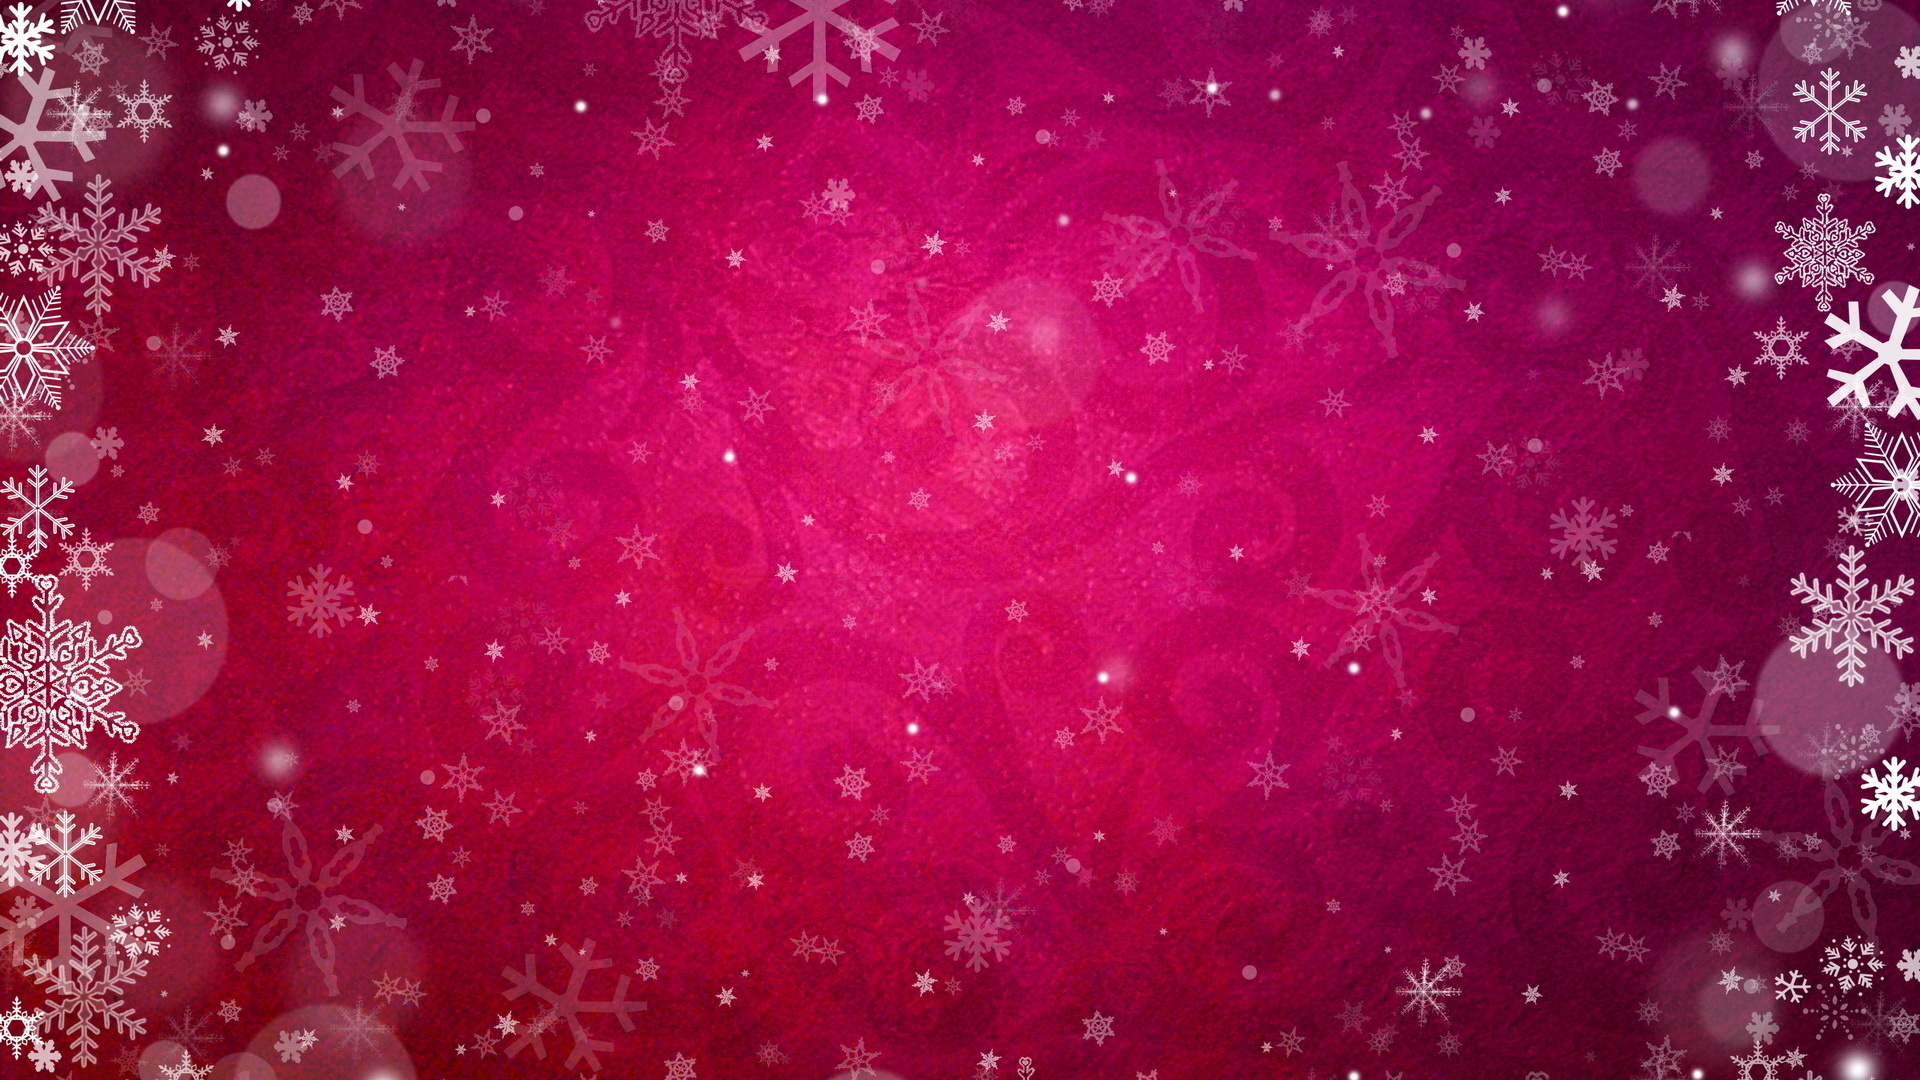 Pink color wallpaper free download